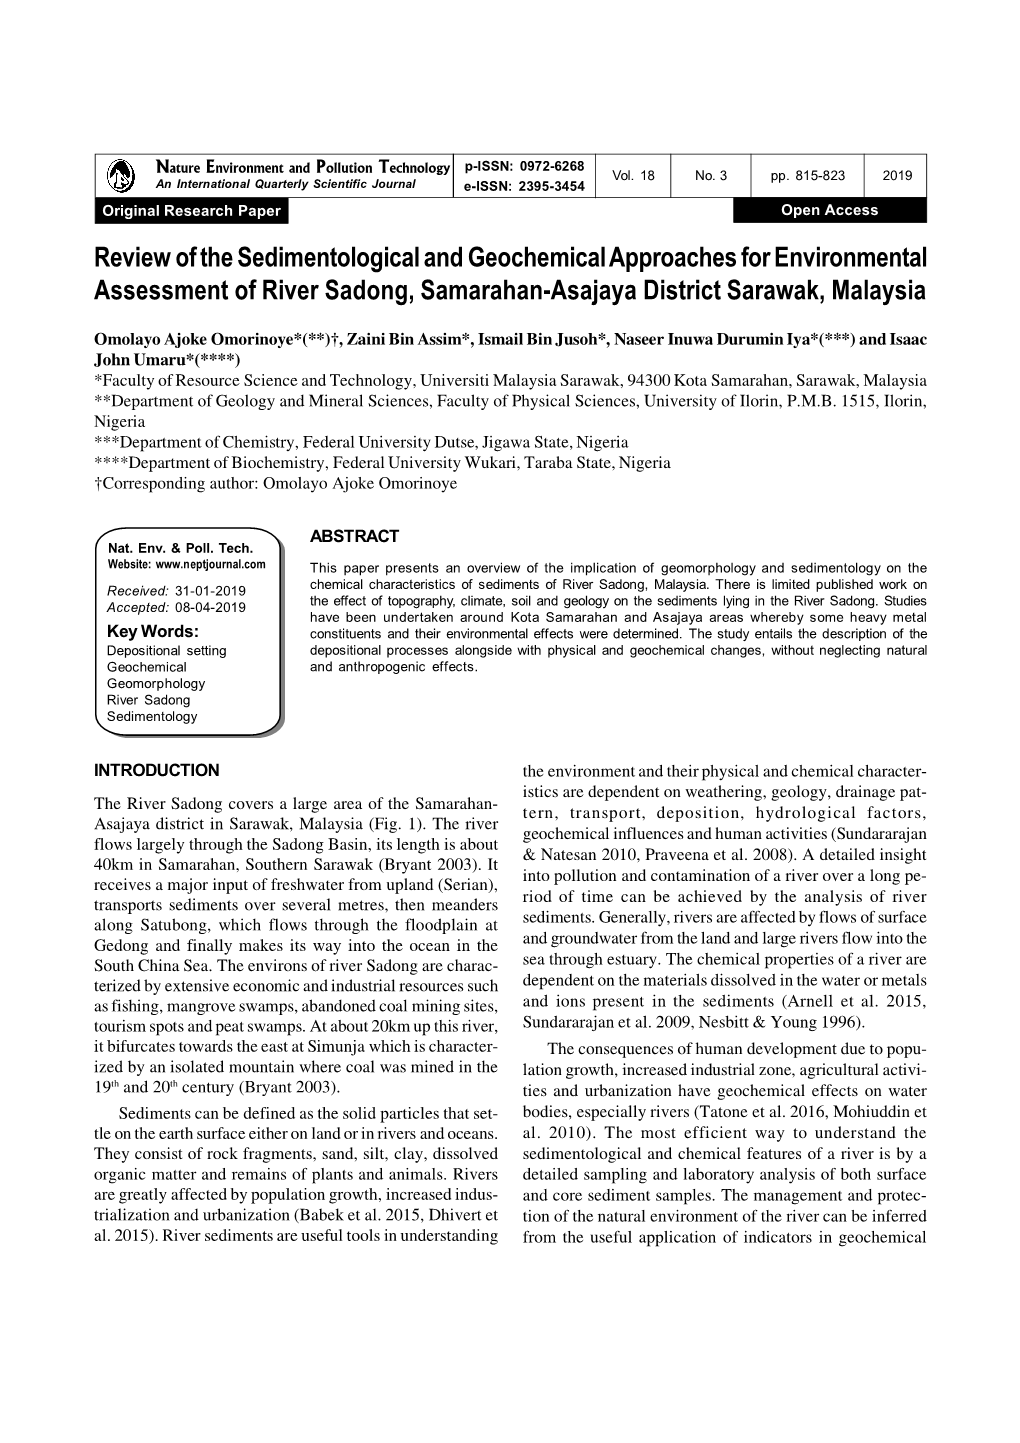 Review of the Sedimentological and Geochemical Approaches for Environmental Assessment of River Sadong, Samarahan-Asajaya District Sarawak, Malaysia